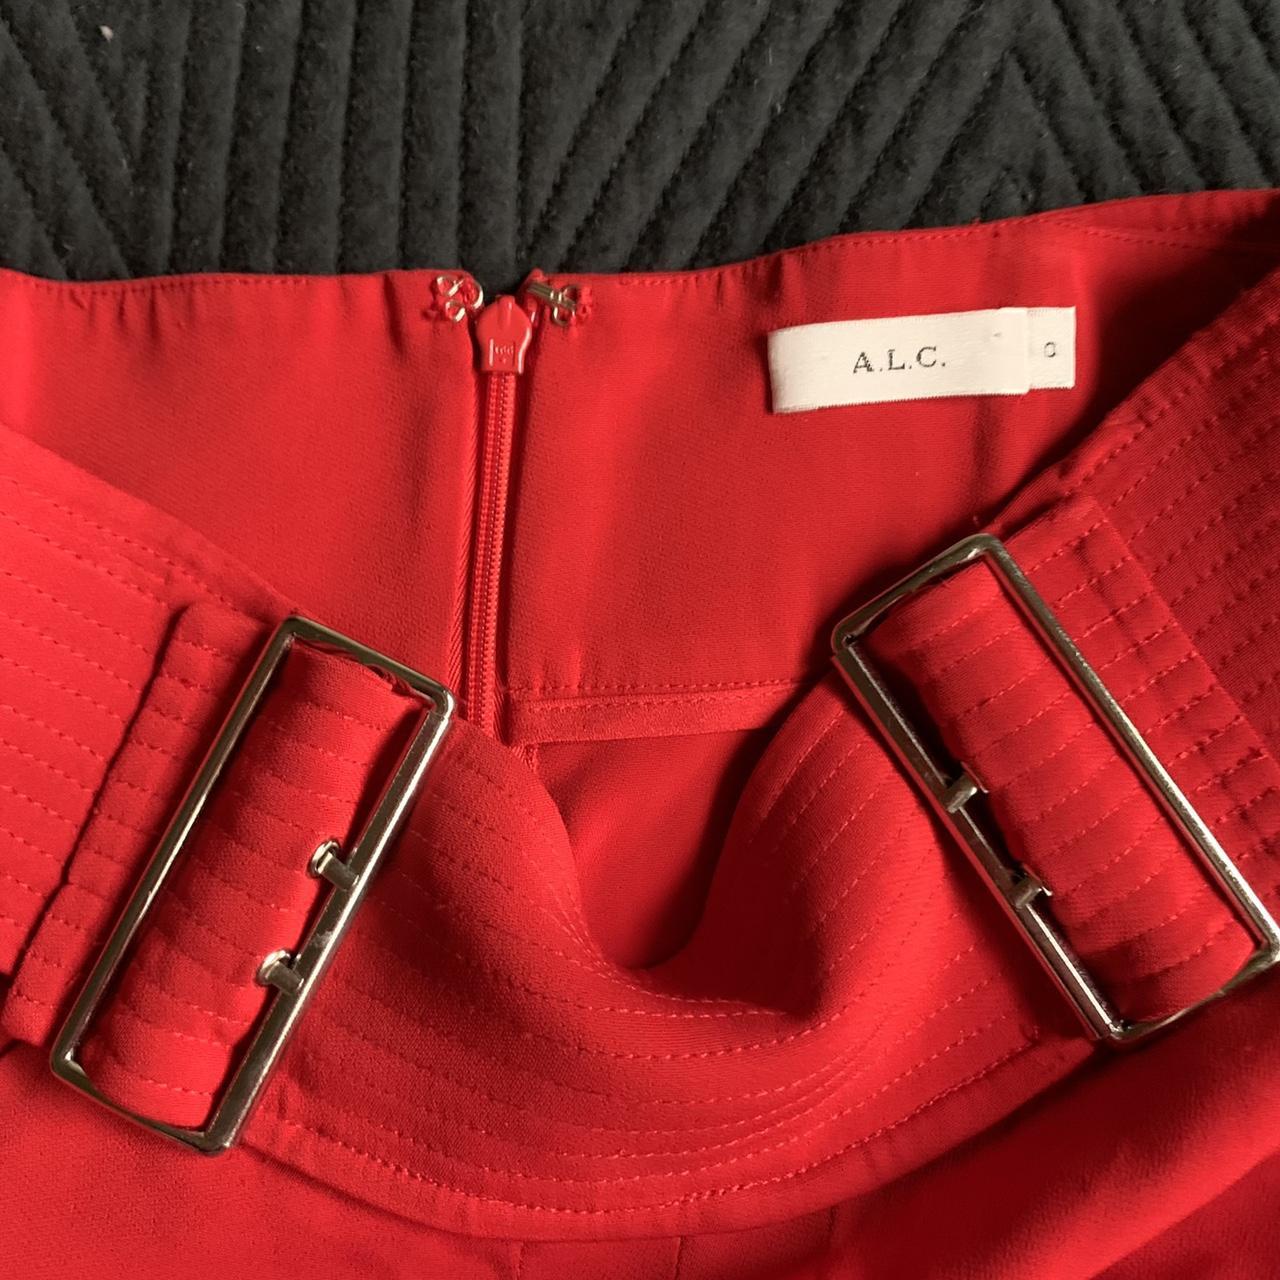 Product Image 4 - Red High Slit Midi Skirt

High